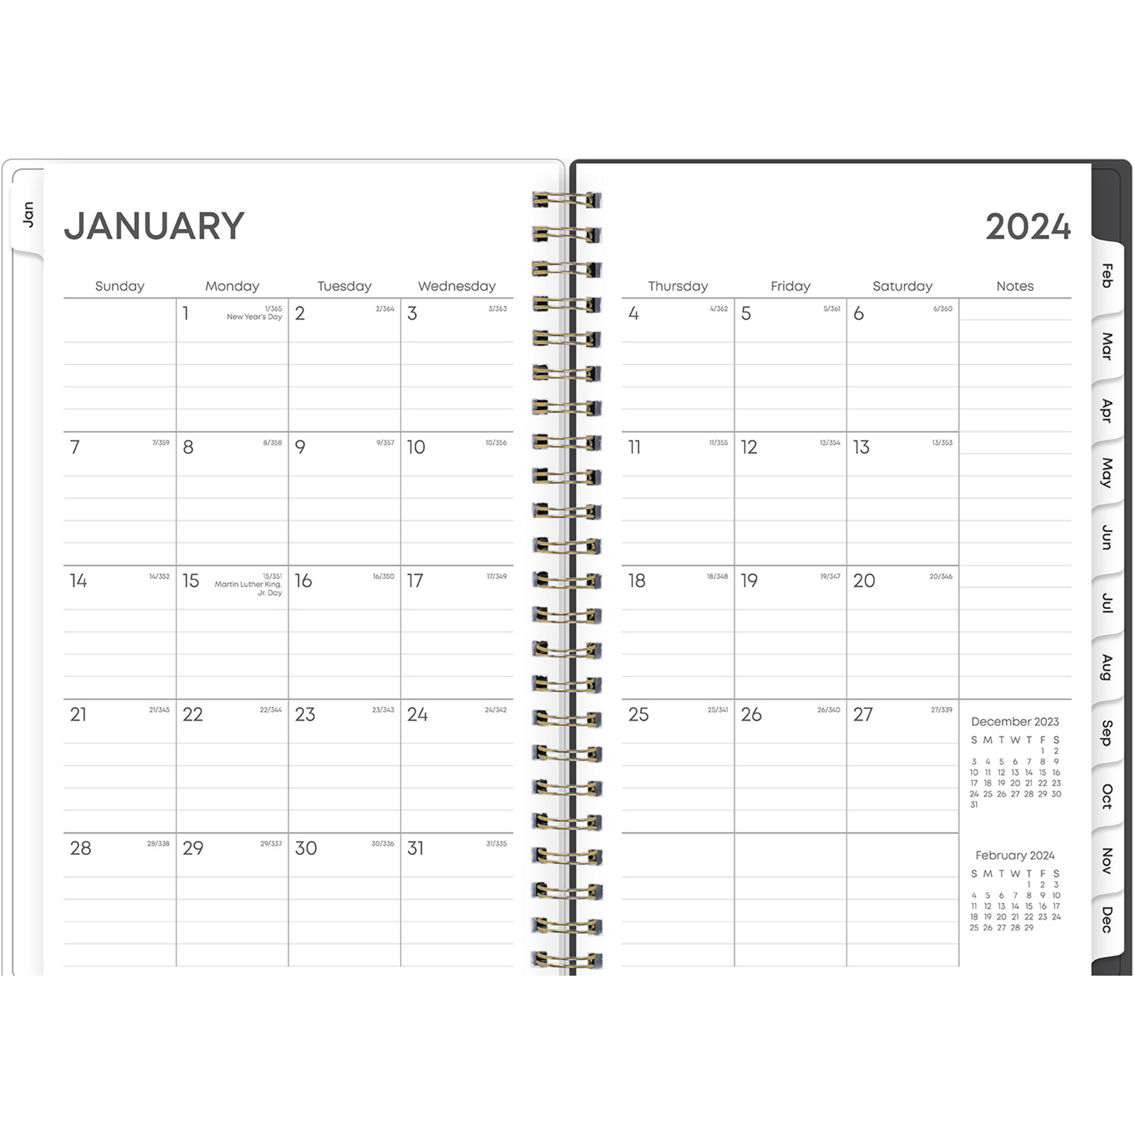 Bluesky Planning Calendar, Makeera Black and White Pattern - Image 3 of 3